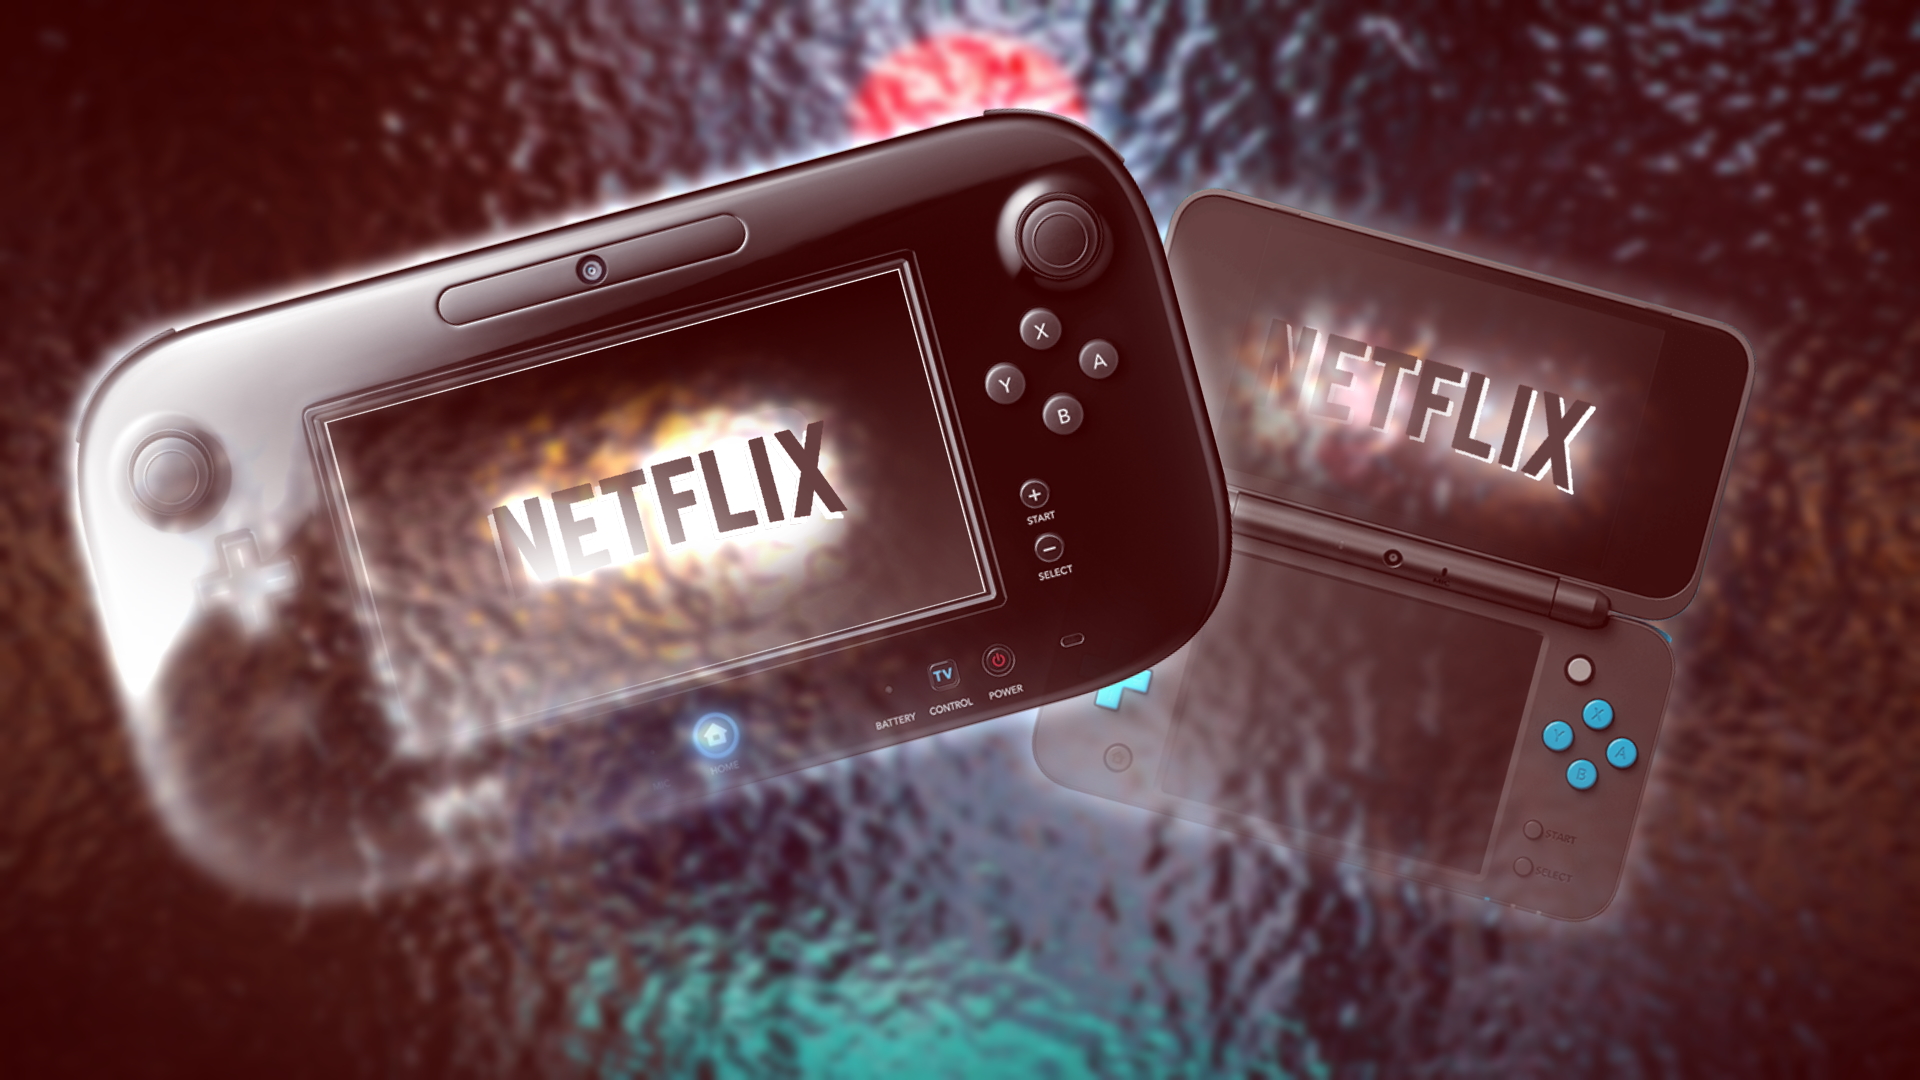 Netflix pulls the plug on Wii U/3DS in summer 2021 – Nintendo Enthusiast